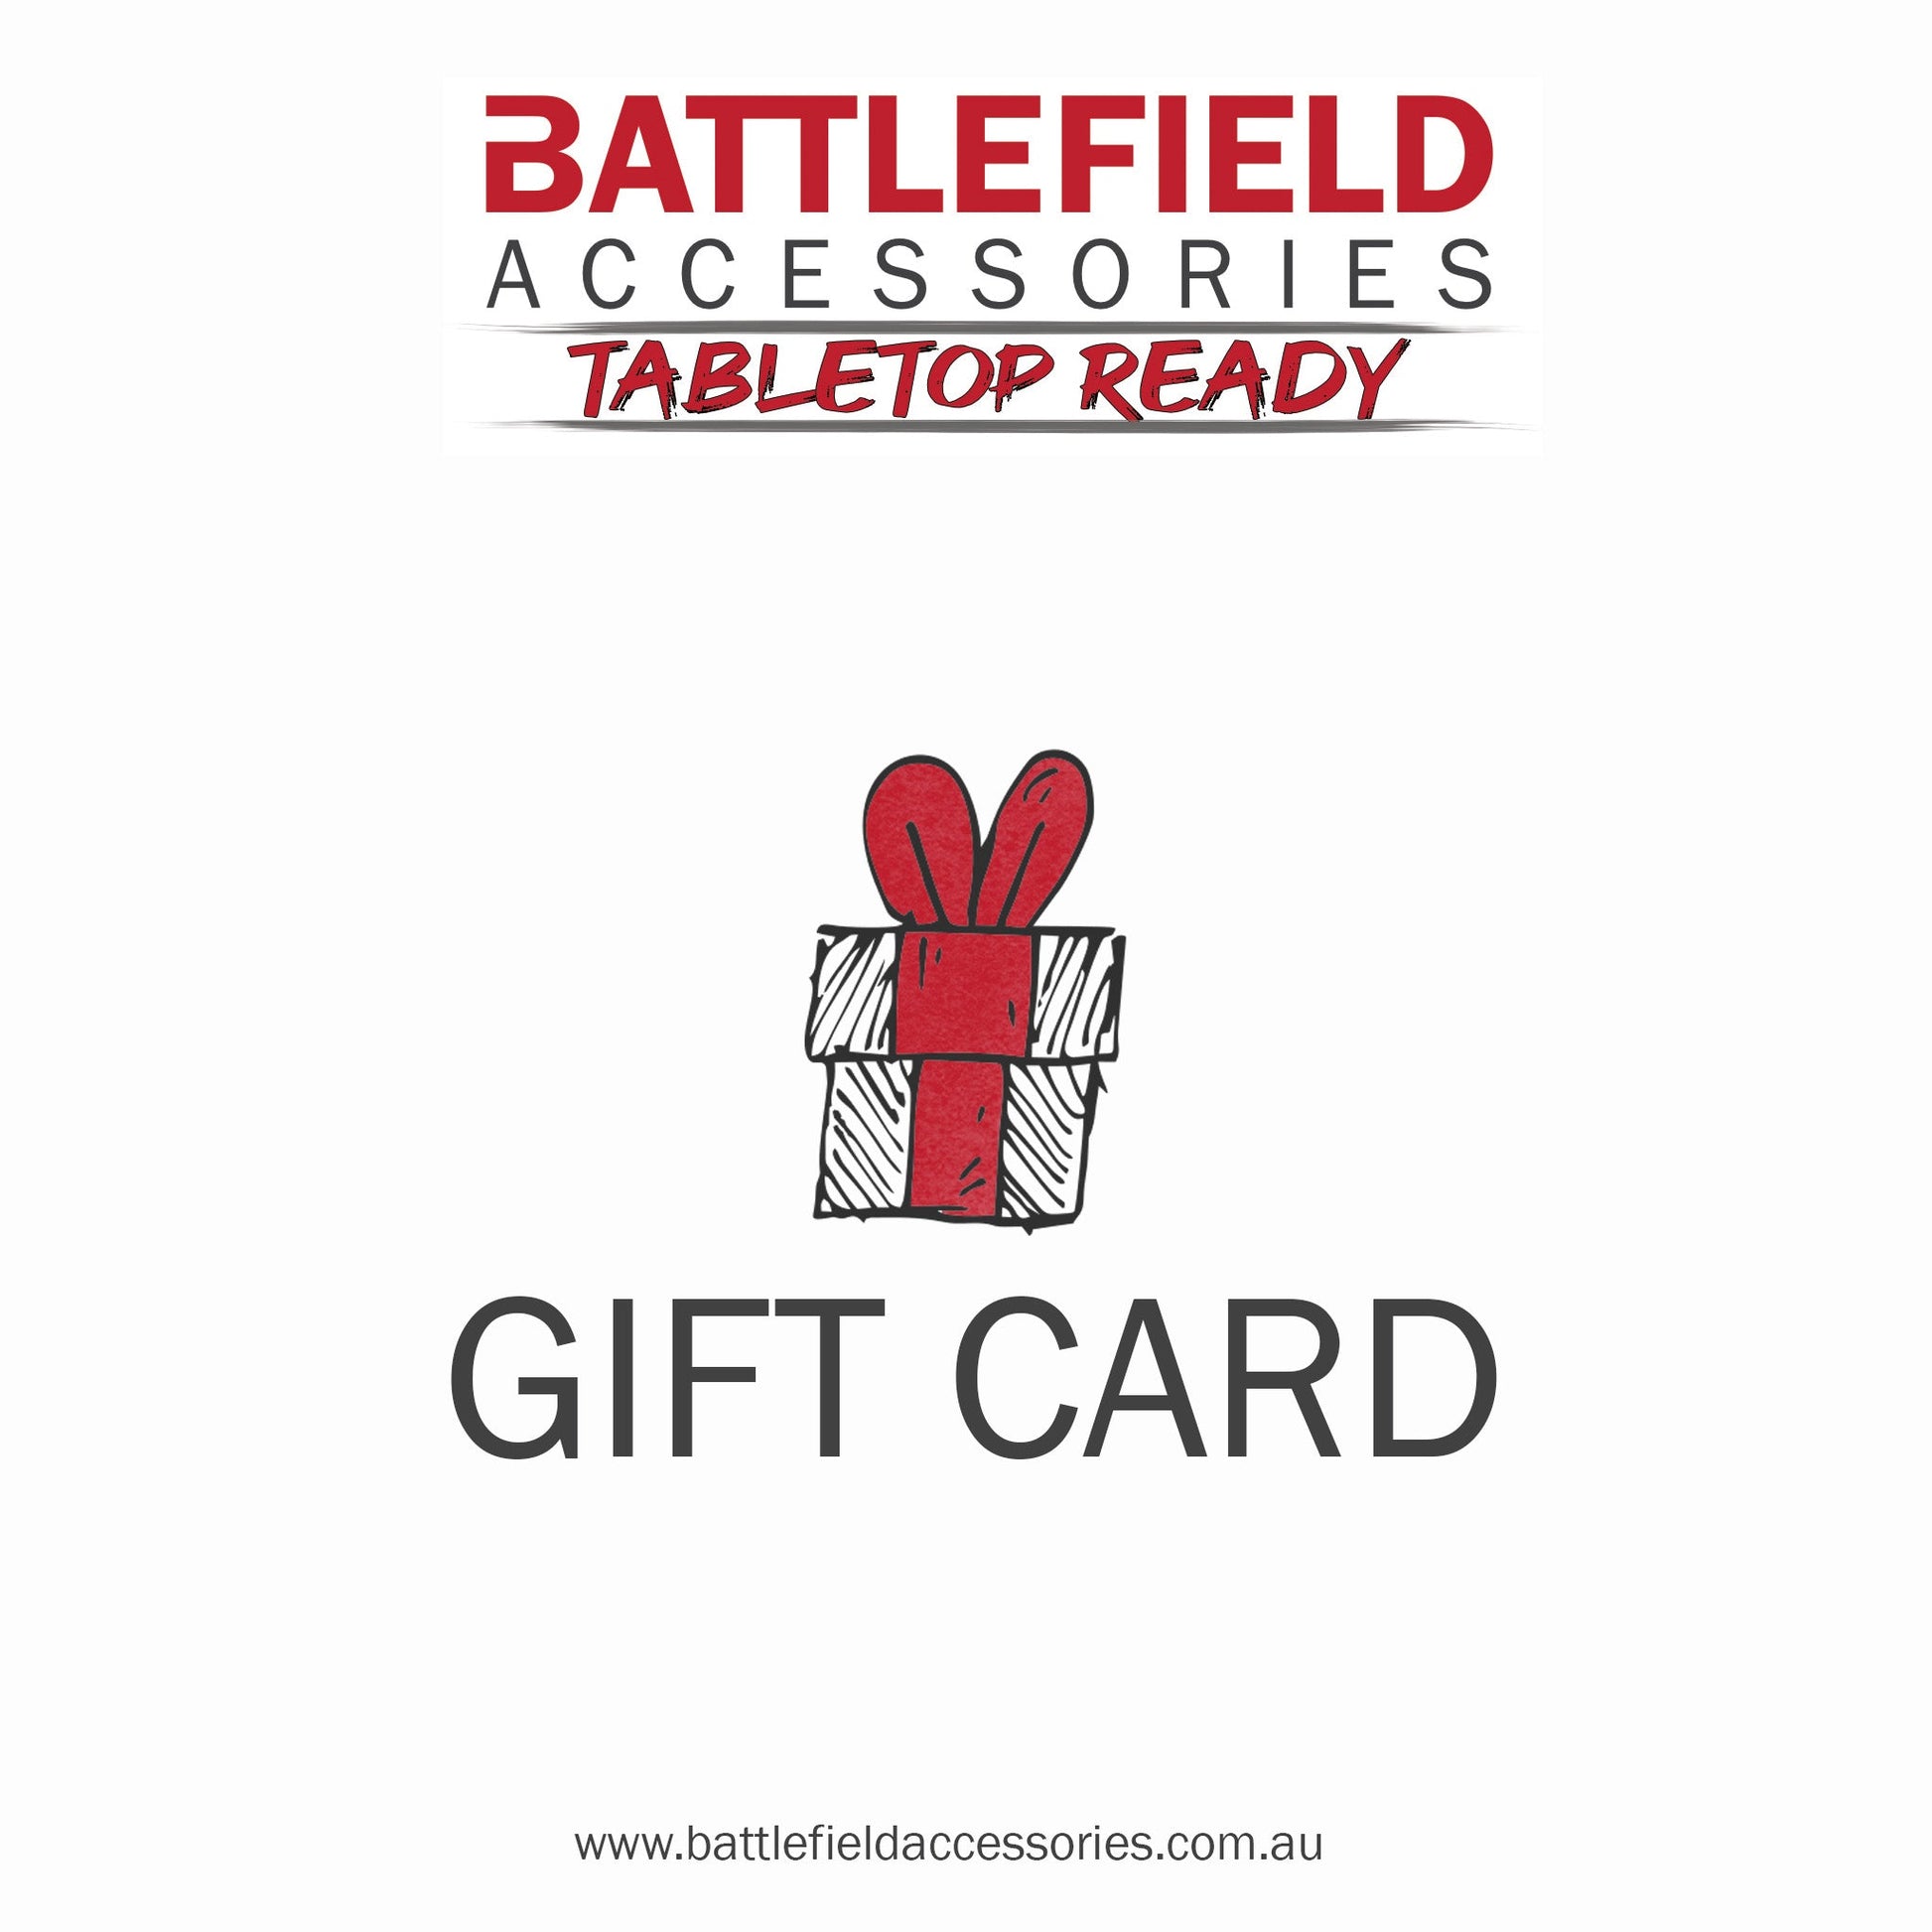 Gift Card - Battlefield Accessories - Battlefield Accessories